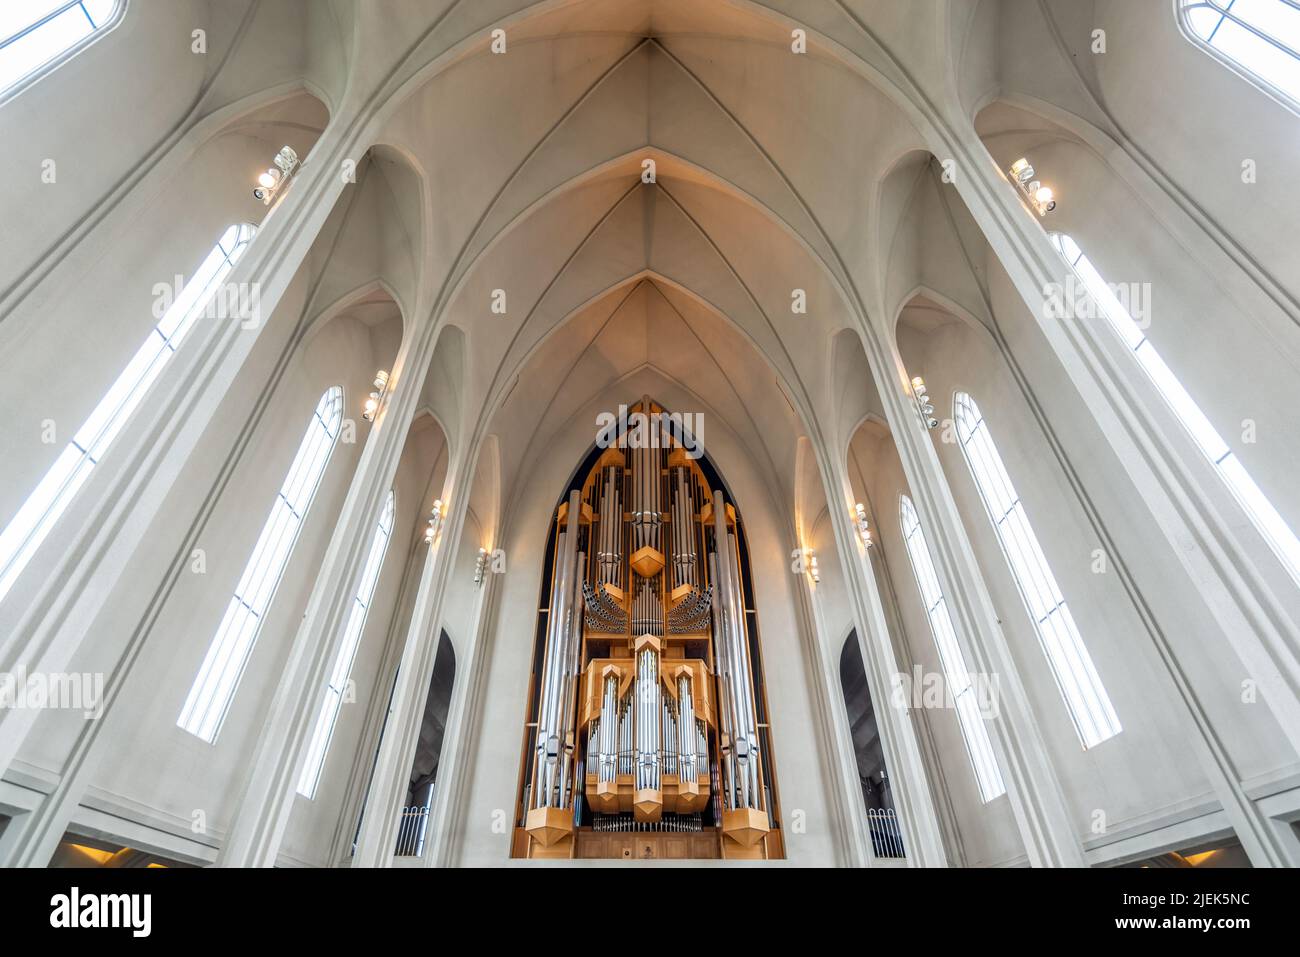 Organ pipes inside  the modern lutheran church of Hallgrim (Hallgrimskirkja) in Reykjavik, Iceland Stock Photo